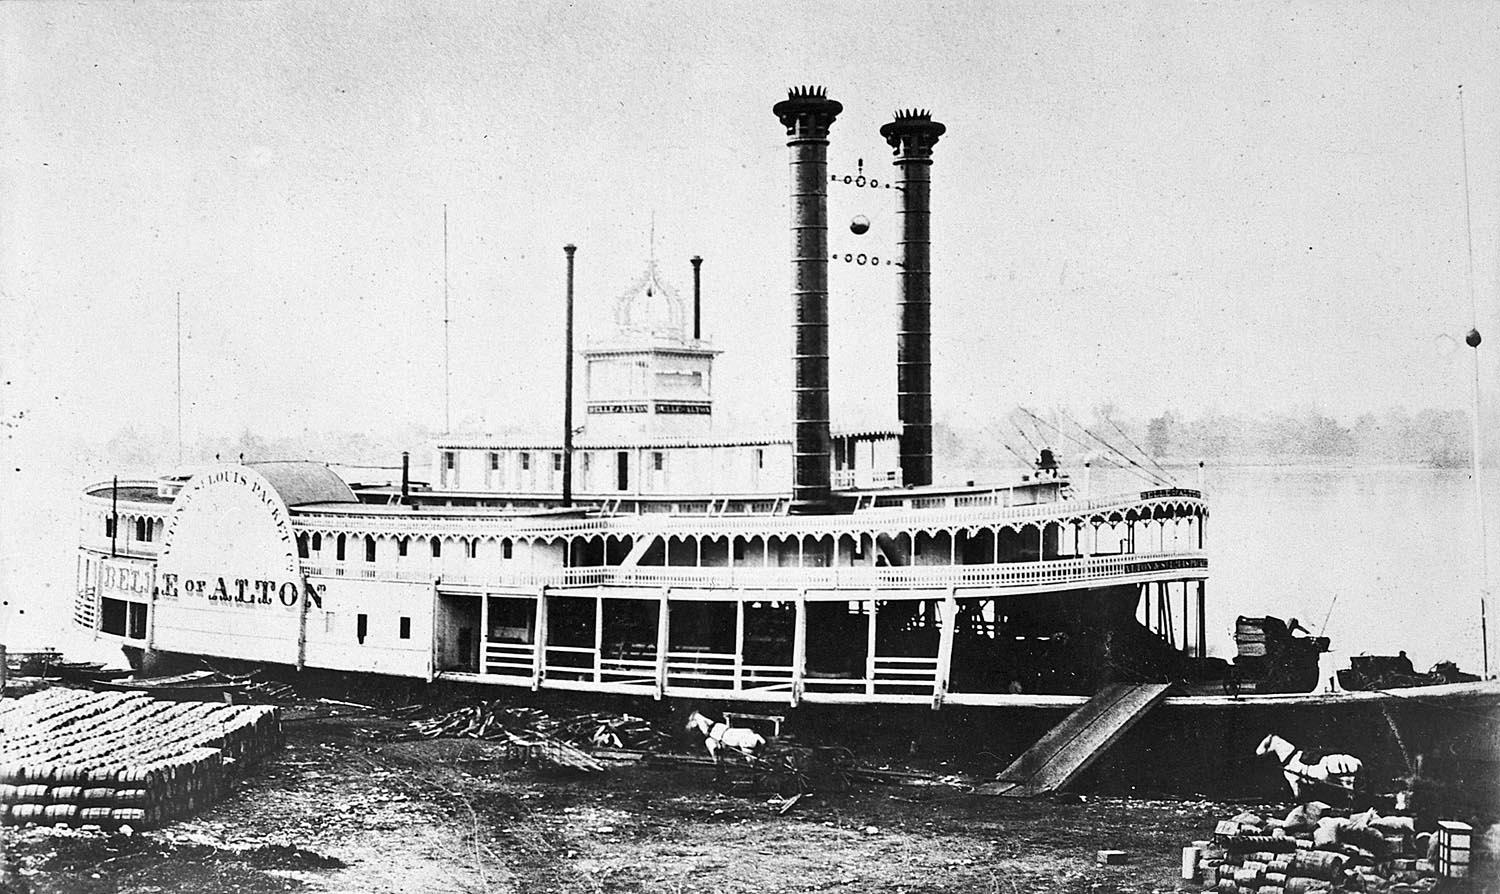 19th century steamboat